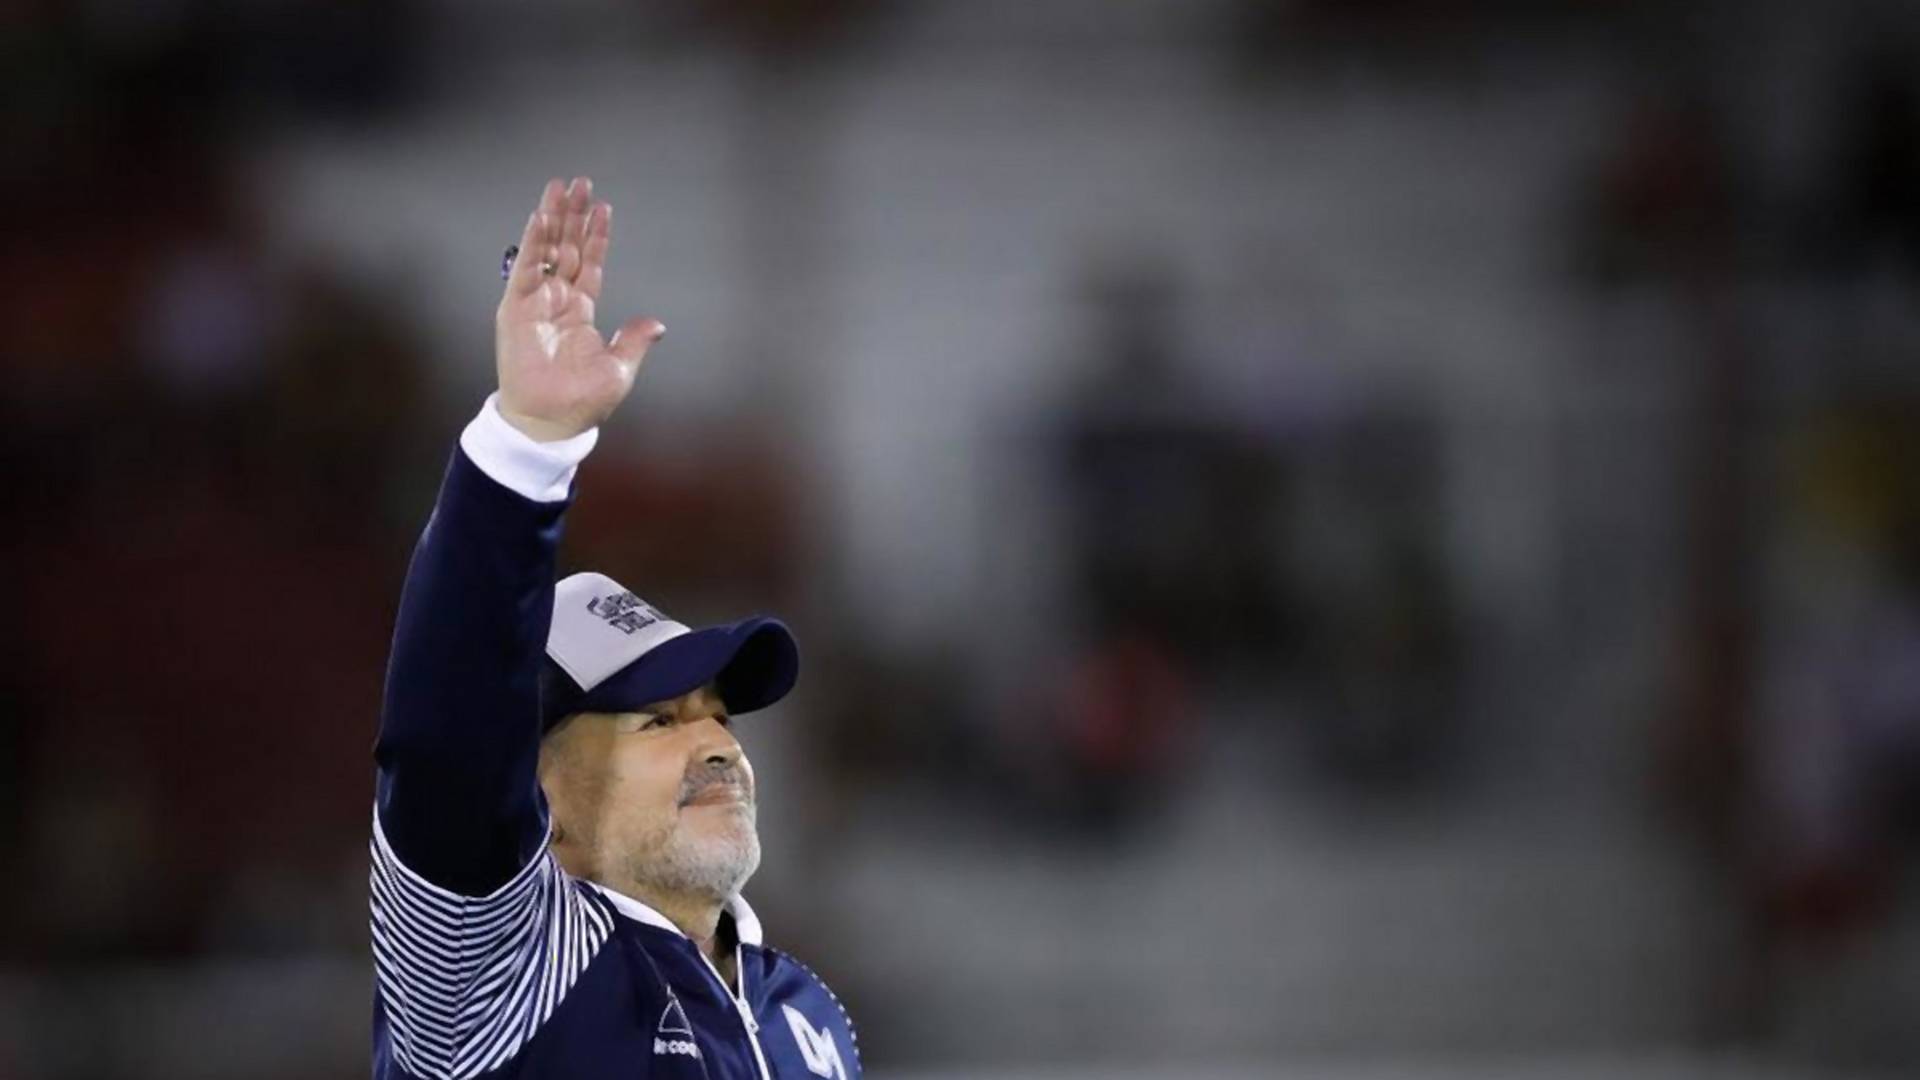 Preminuo Maradona, najpoznatiji fudbaler sveta